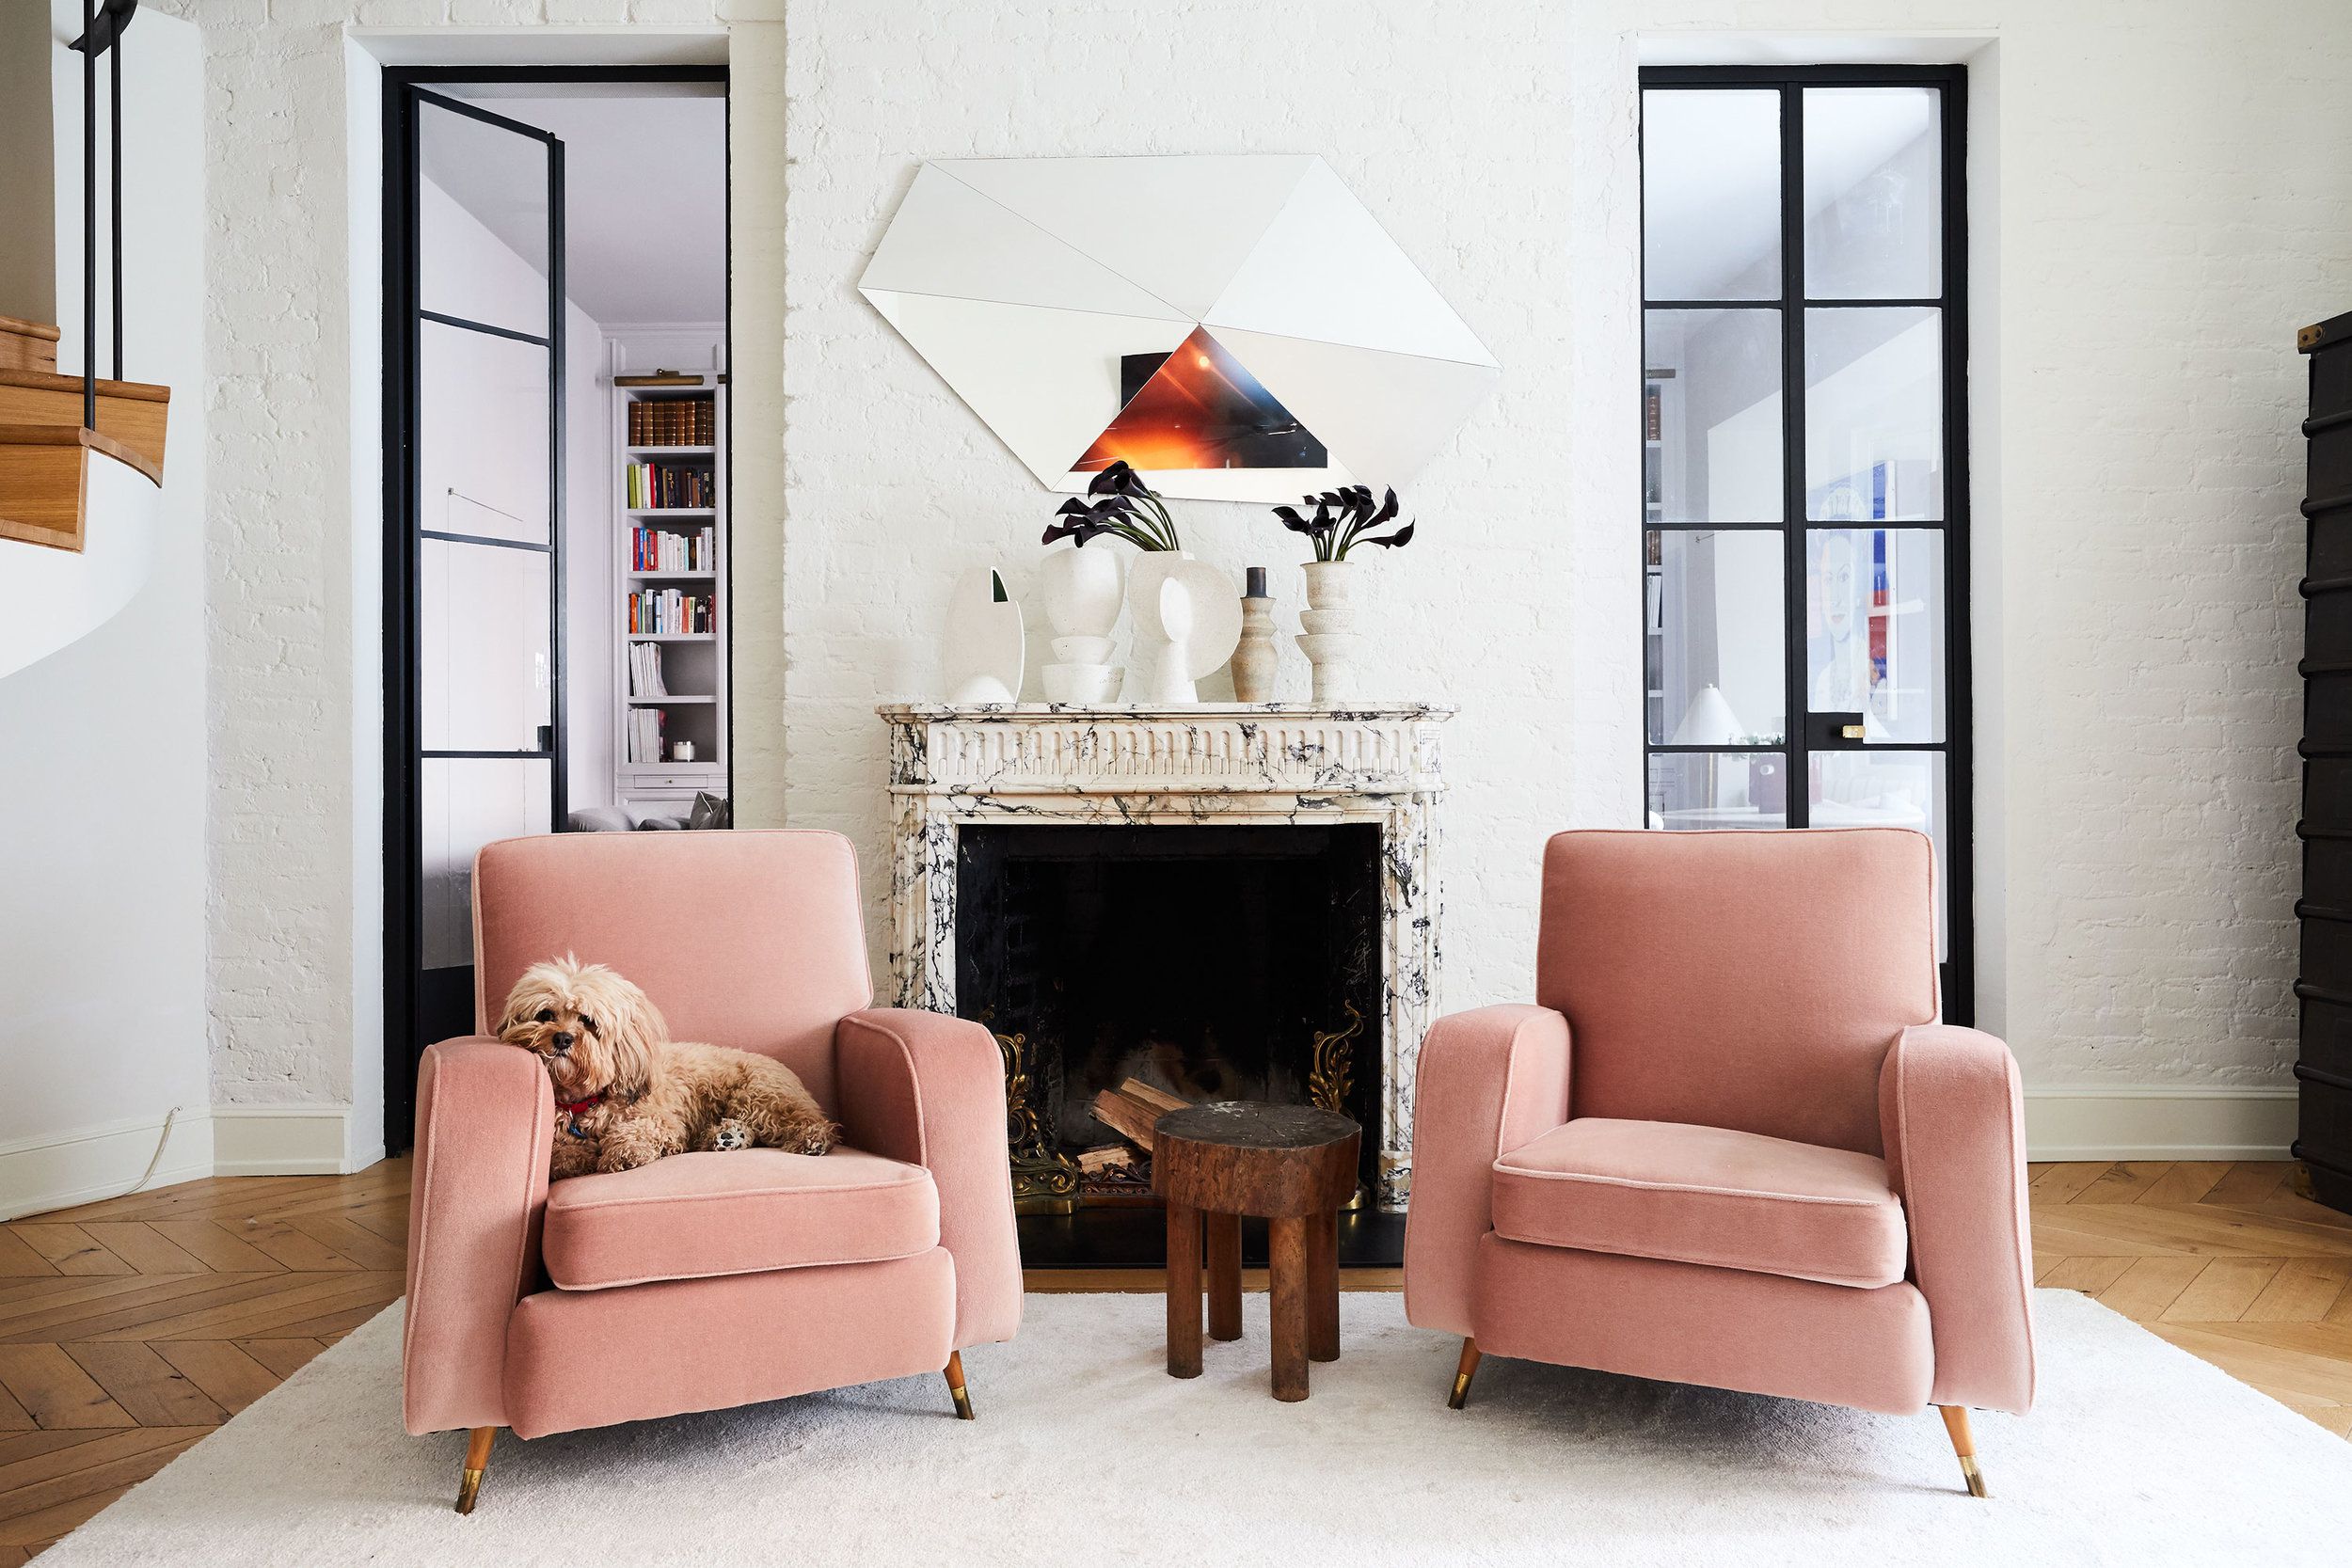 45 Best Fireplace Ideas - Stylish Indoor Fireplace Designs, Decor